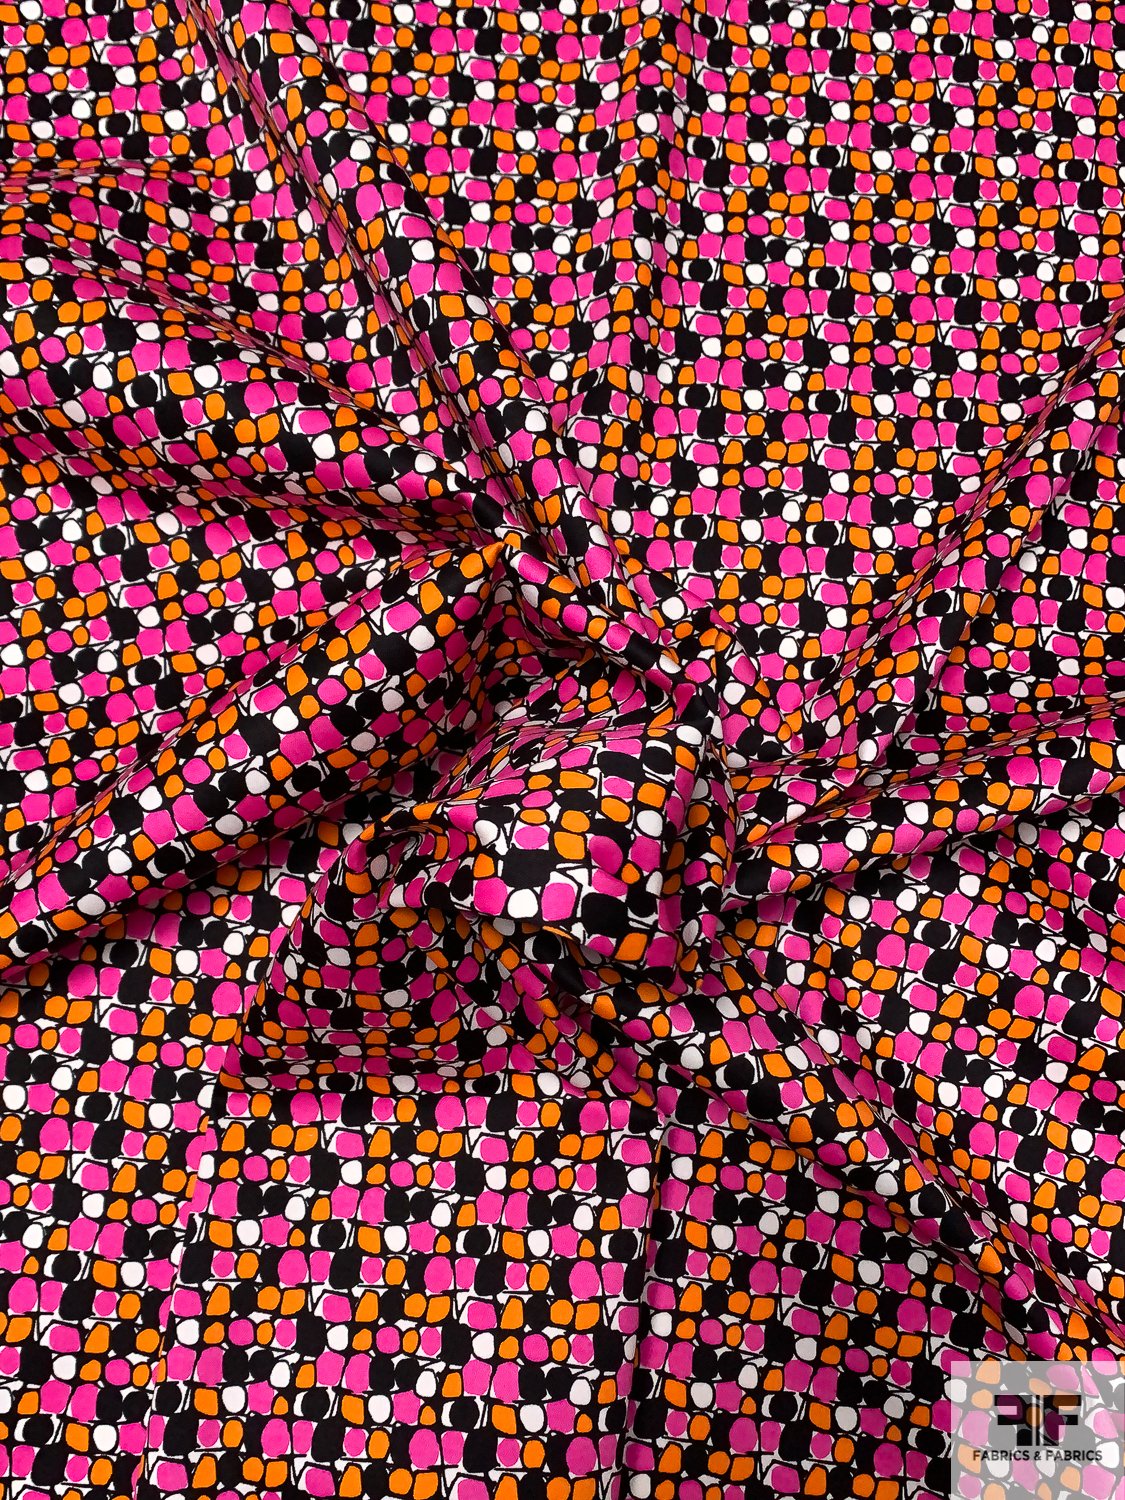 Pebble-Look Printed Stretch Cotton Sateen - Hot Pink / Orange / Black / Black